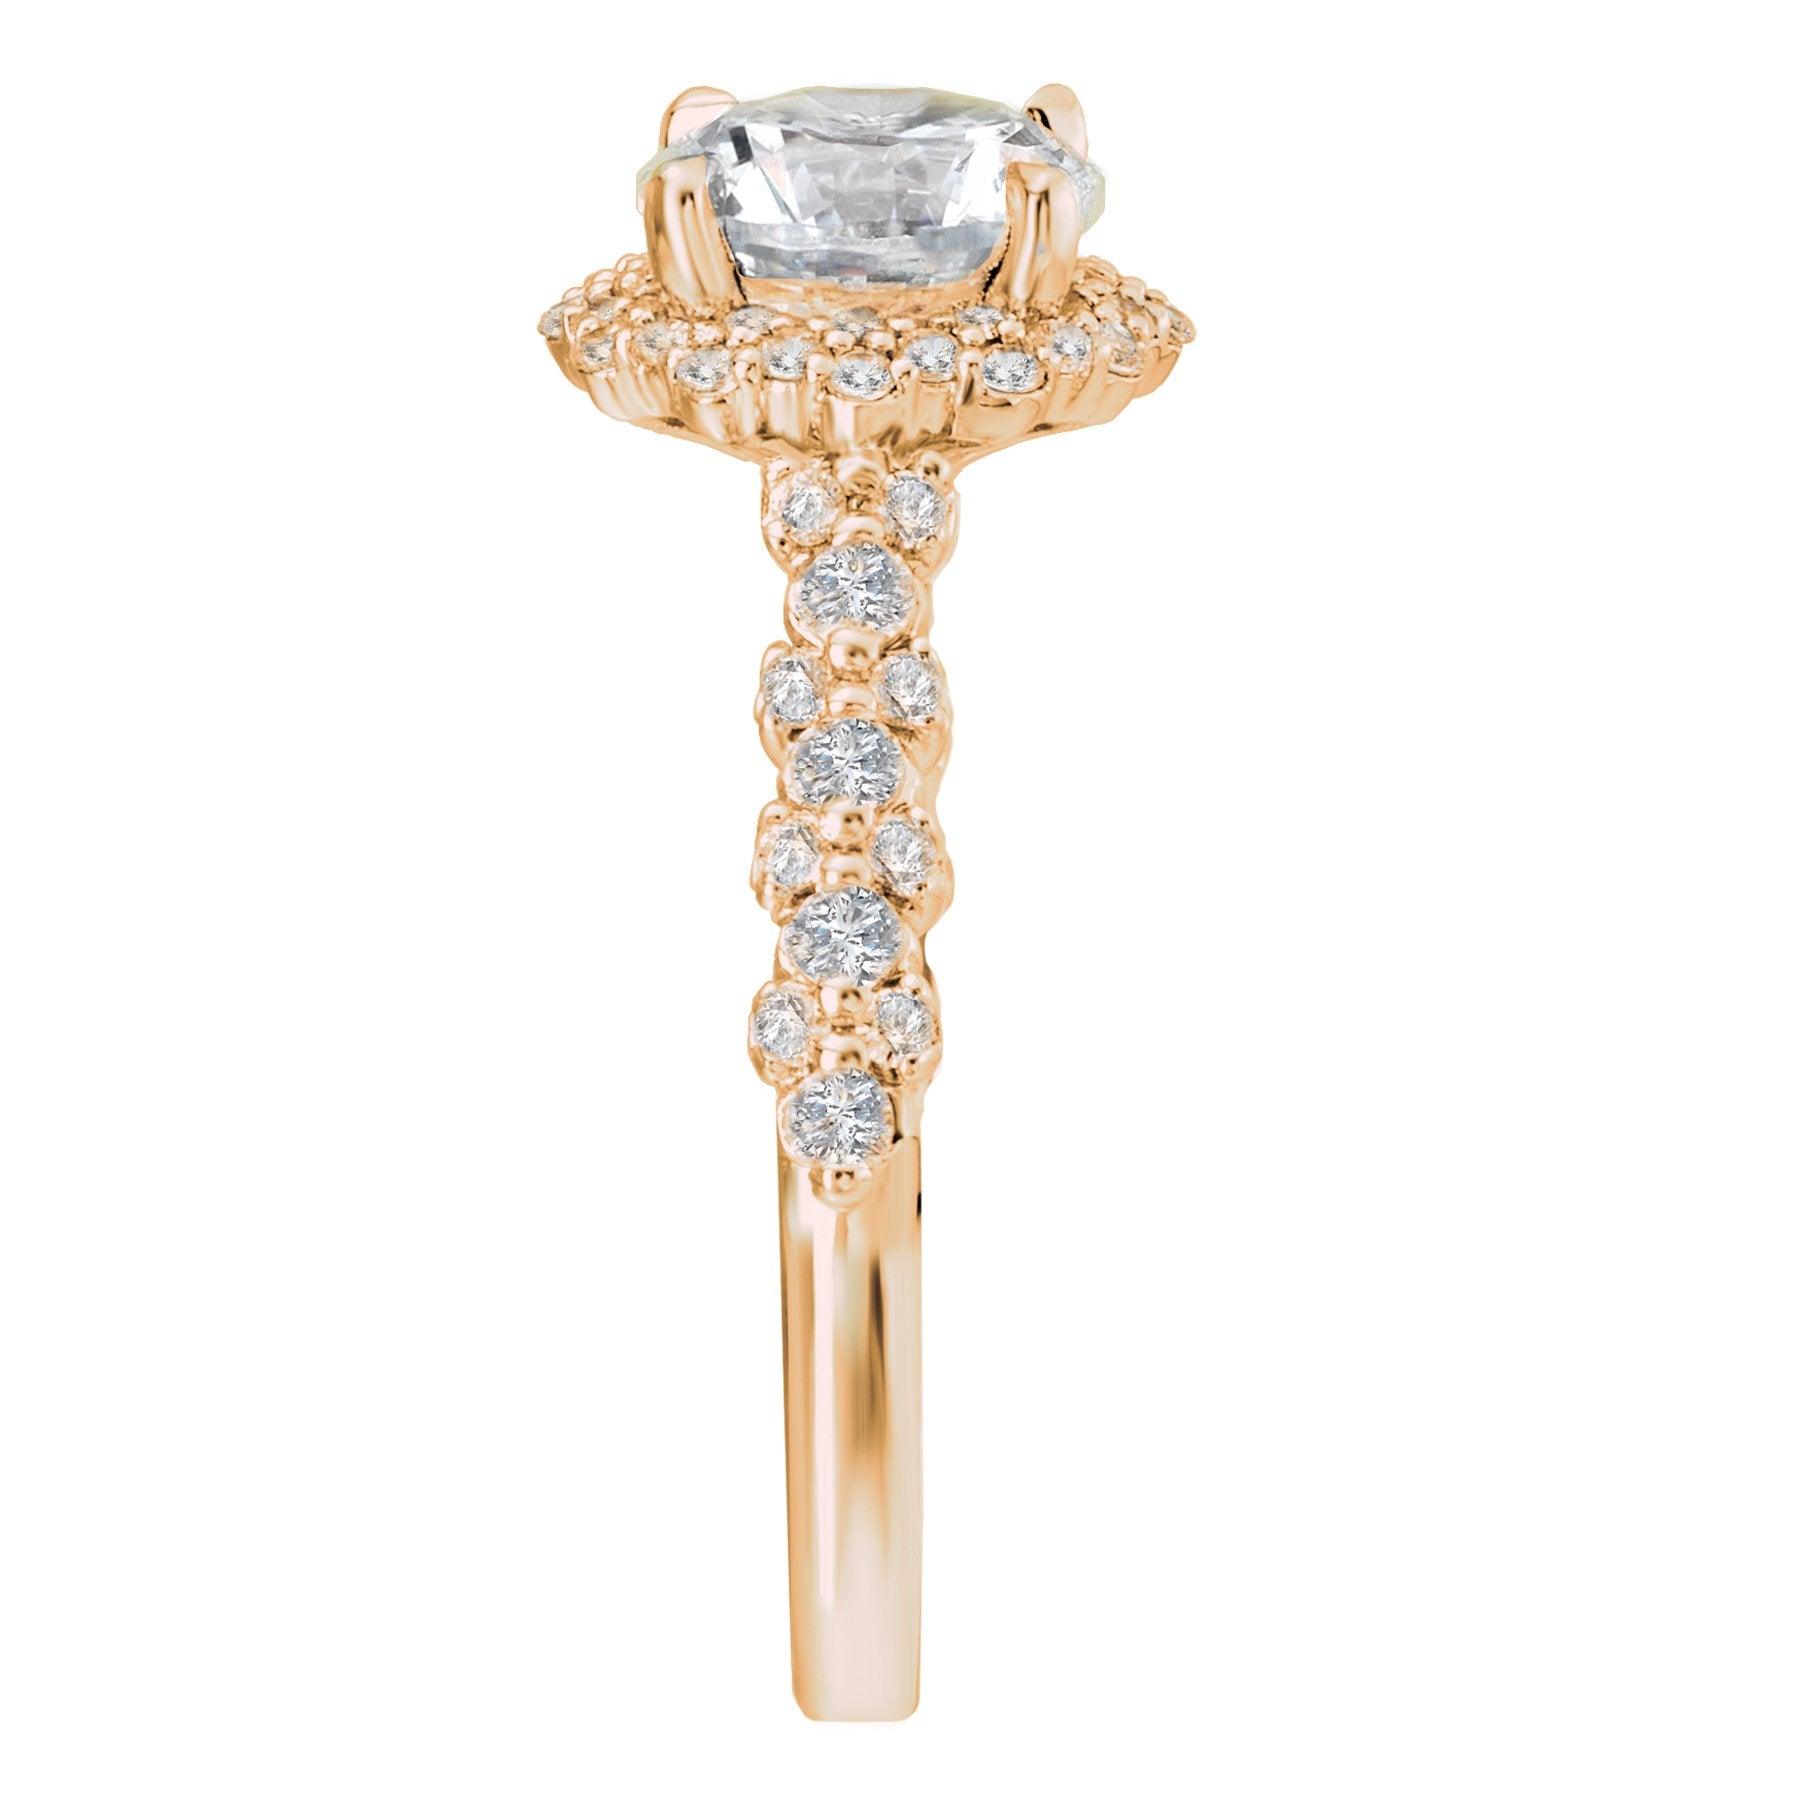 BW JAMES Engagement Rings "The Vegas" Halo Semi-Mount Diamond Ring